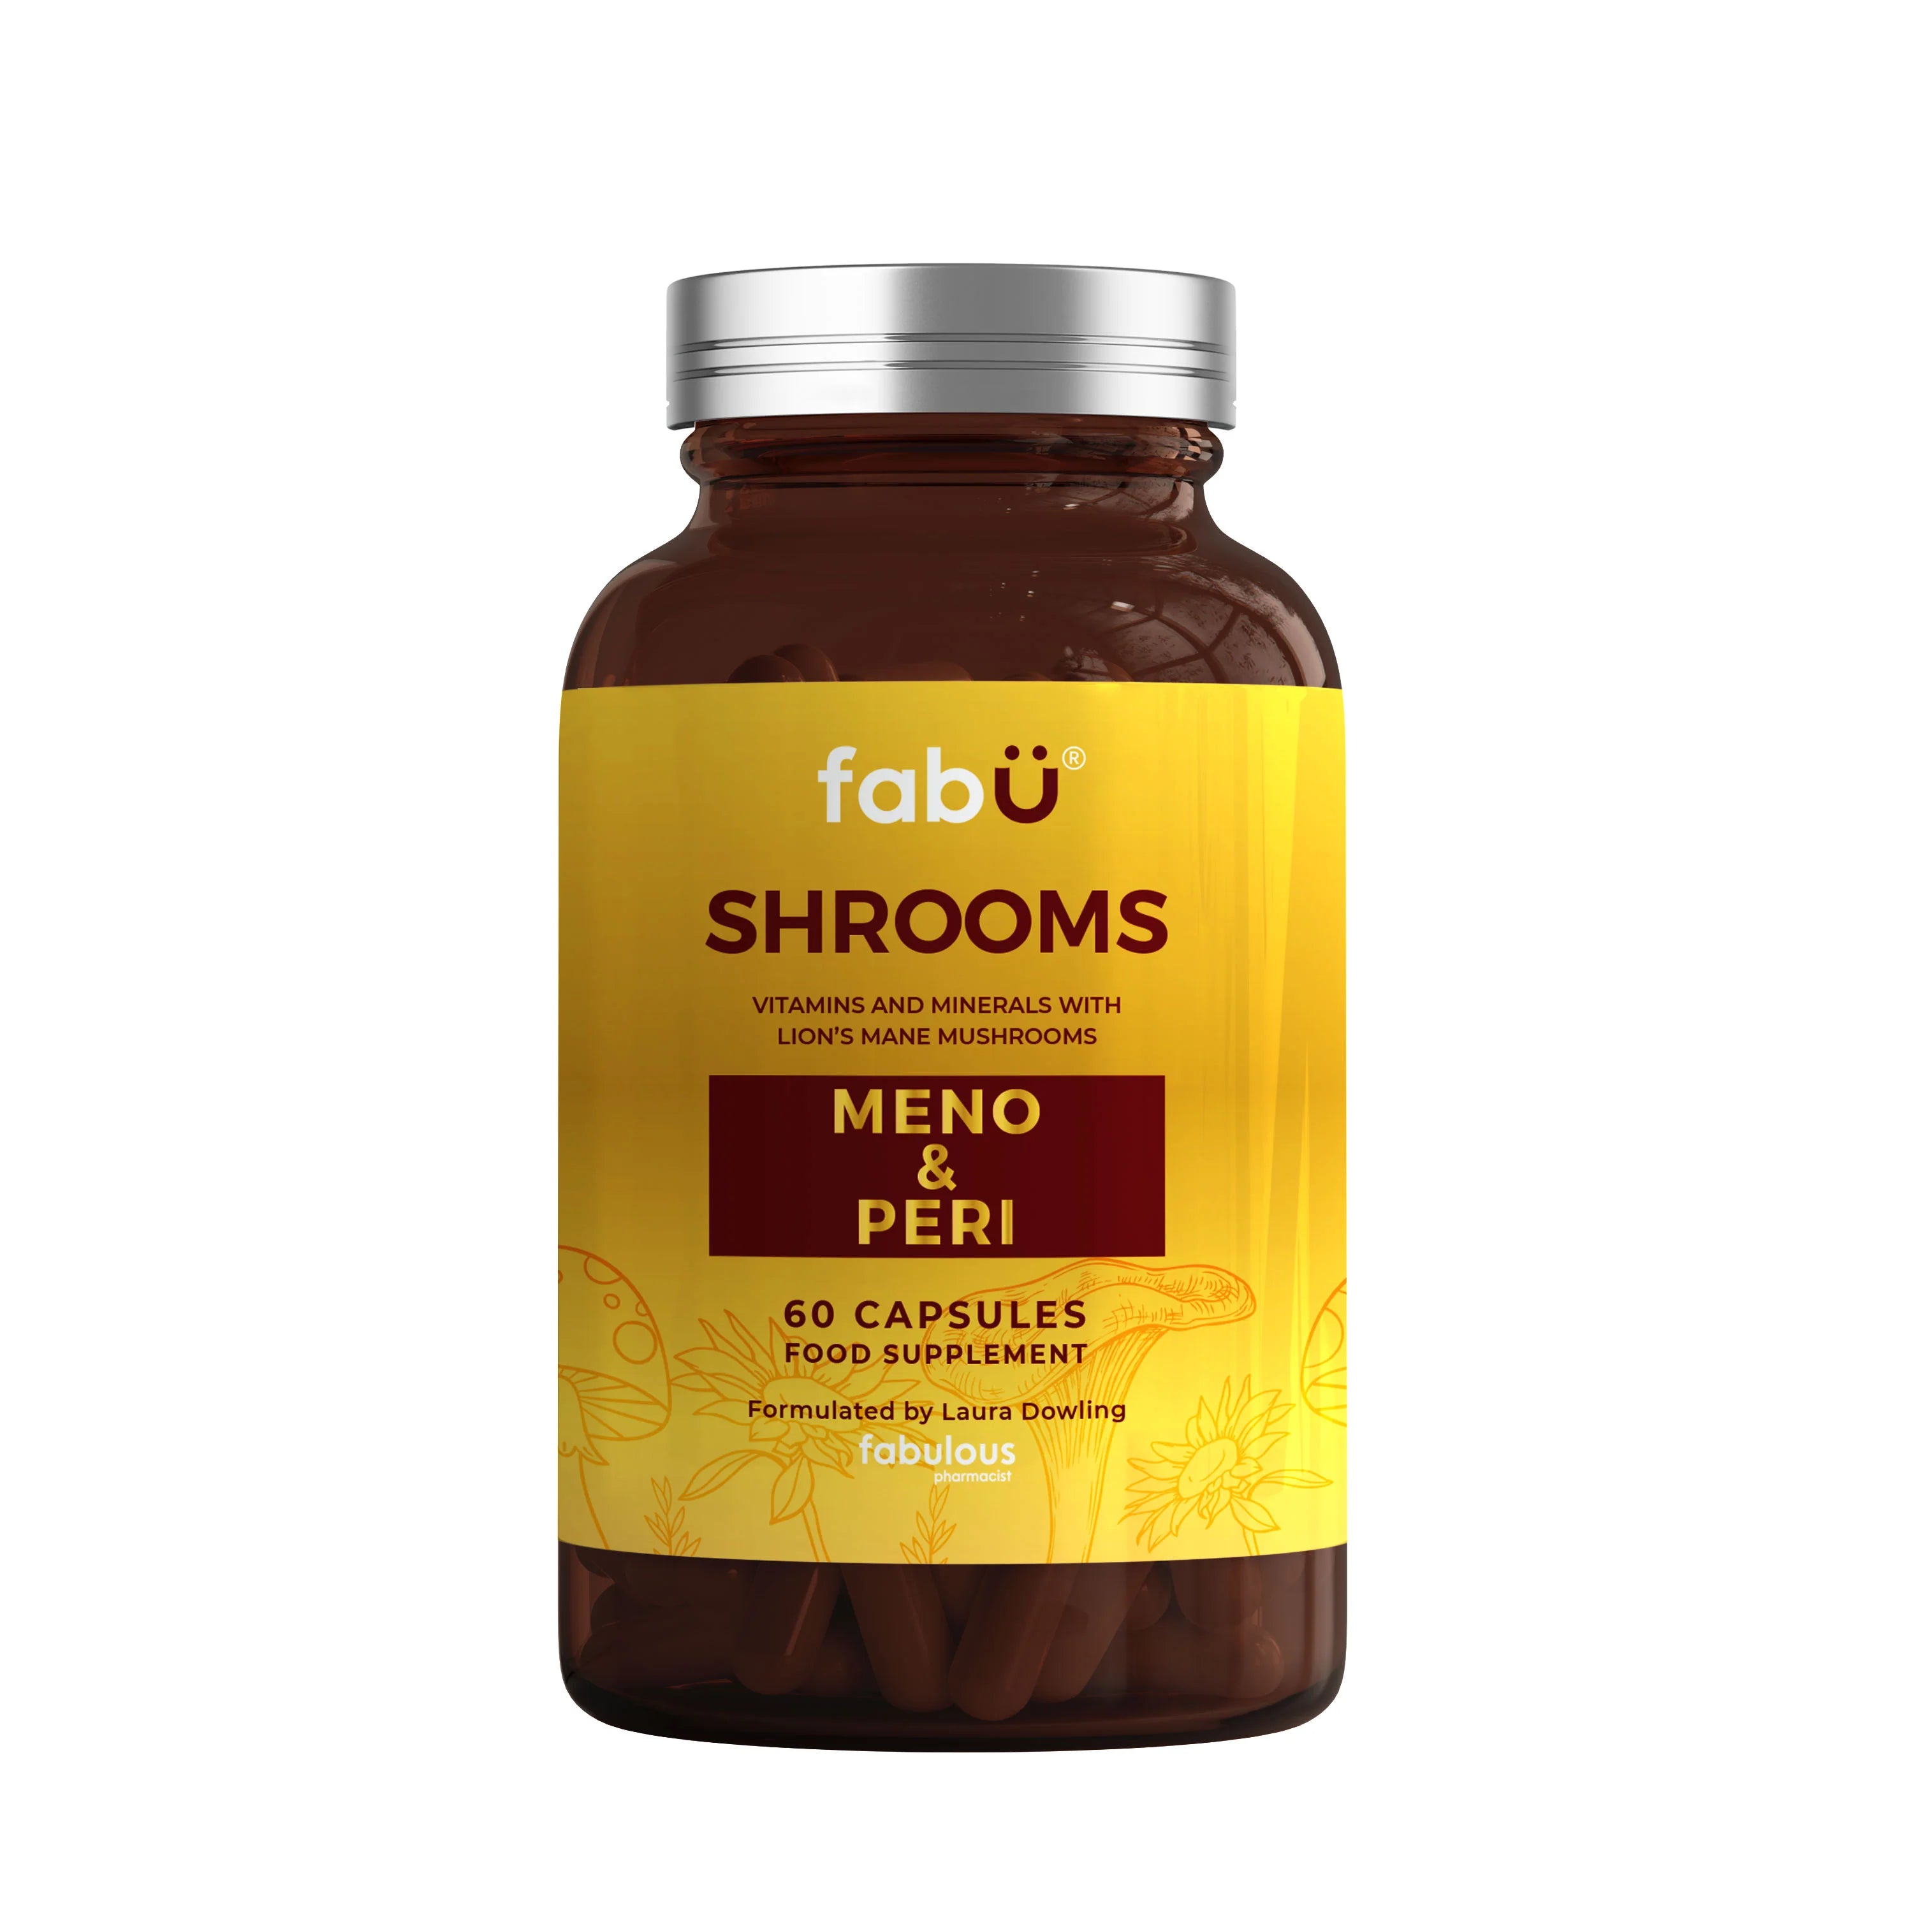 Fabu Shrooms Meno & Peri Menopause Supplements